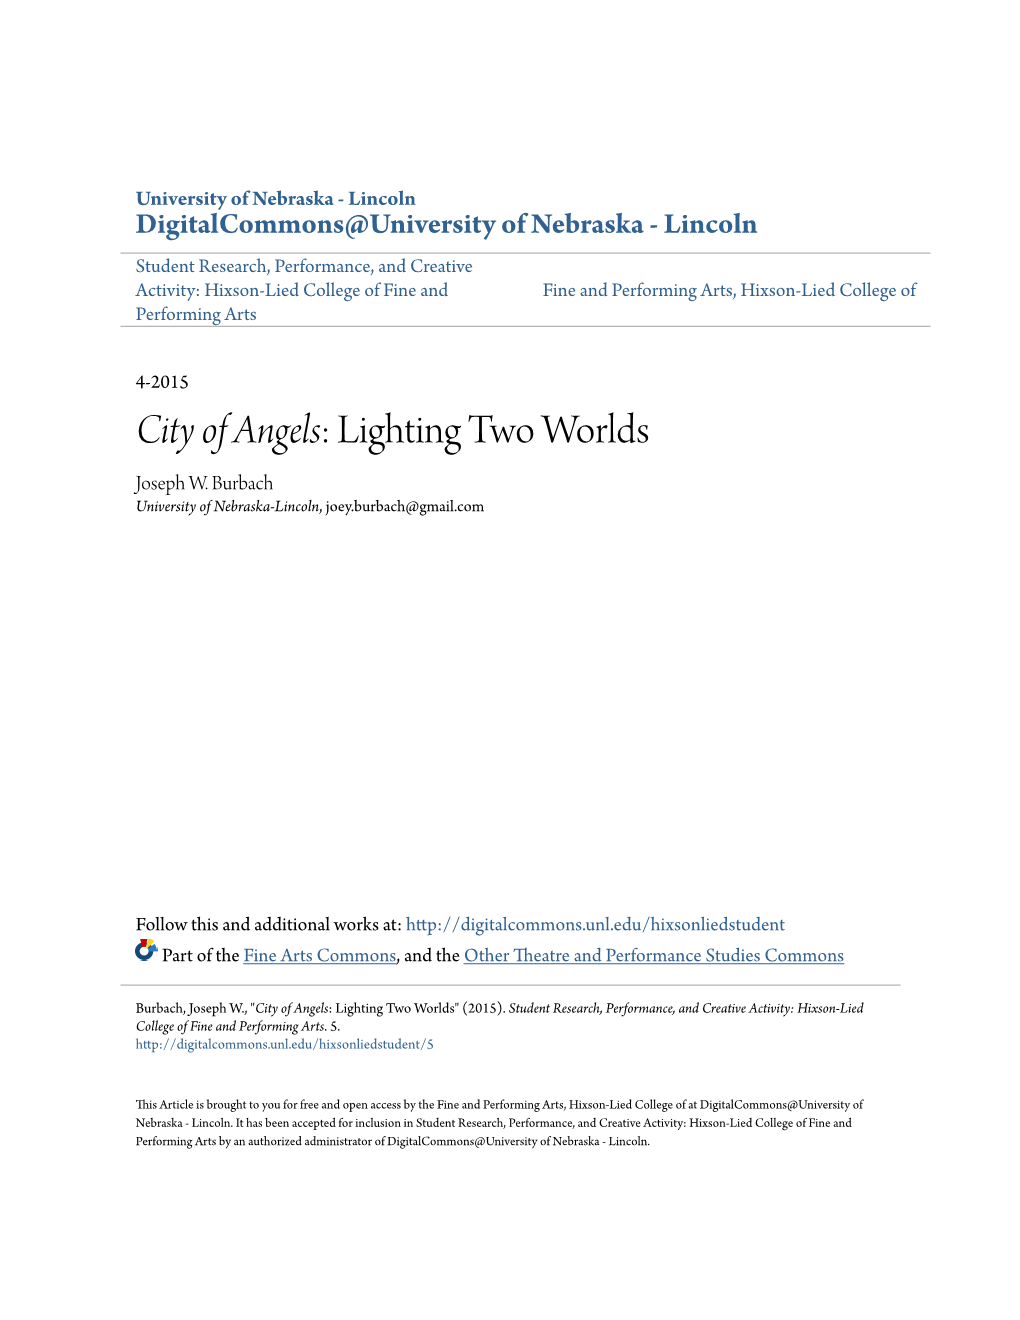 City of Angels: Lighting Two Worlds Joseph W